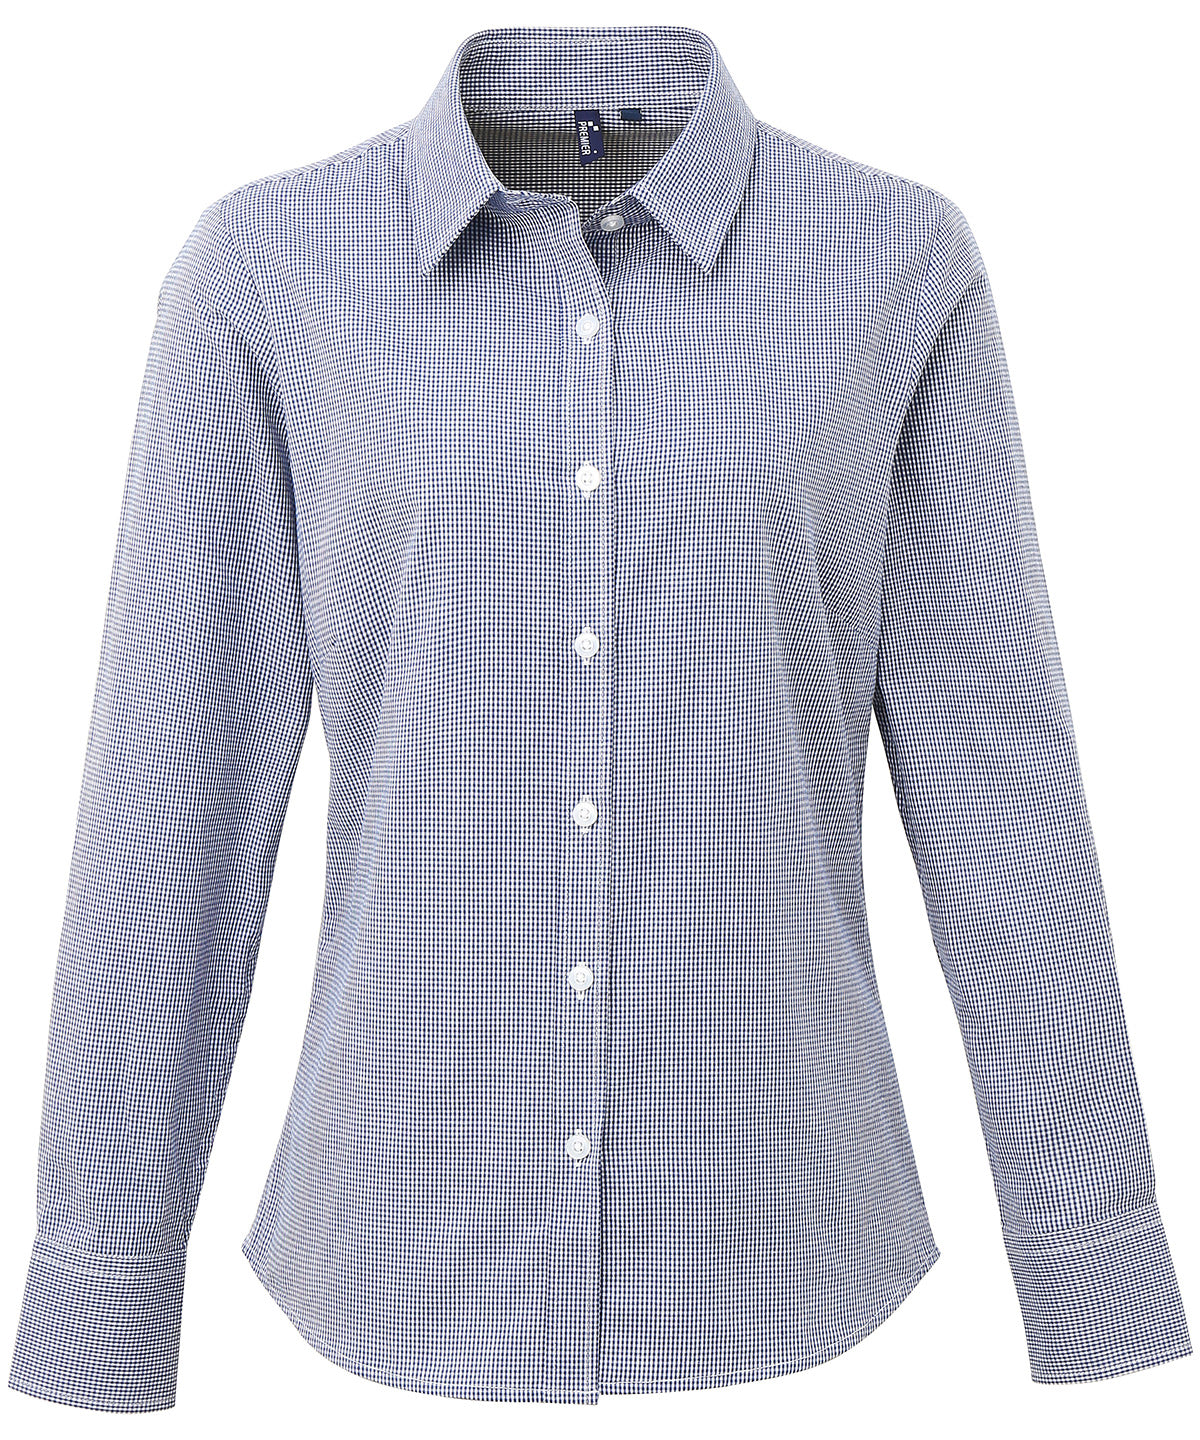 Bolir - Women's Microcheck (Gingham) Long Sleeve Cotton Shirt